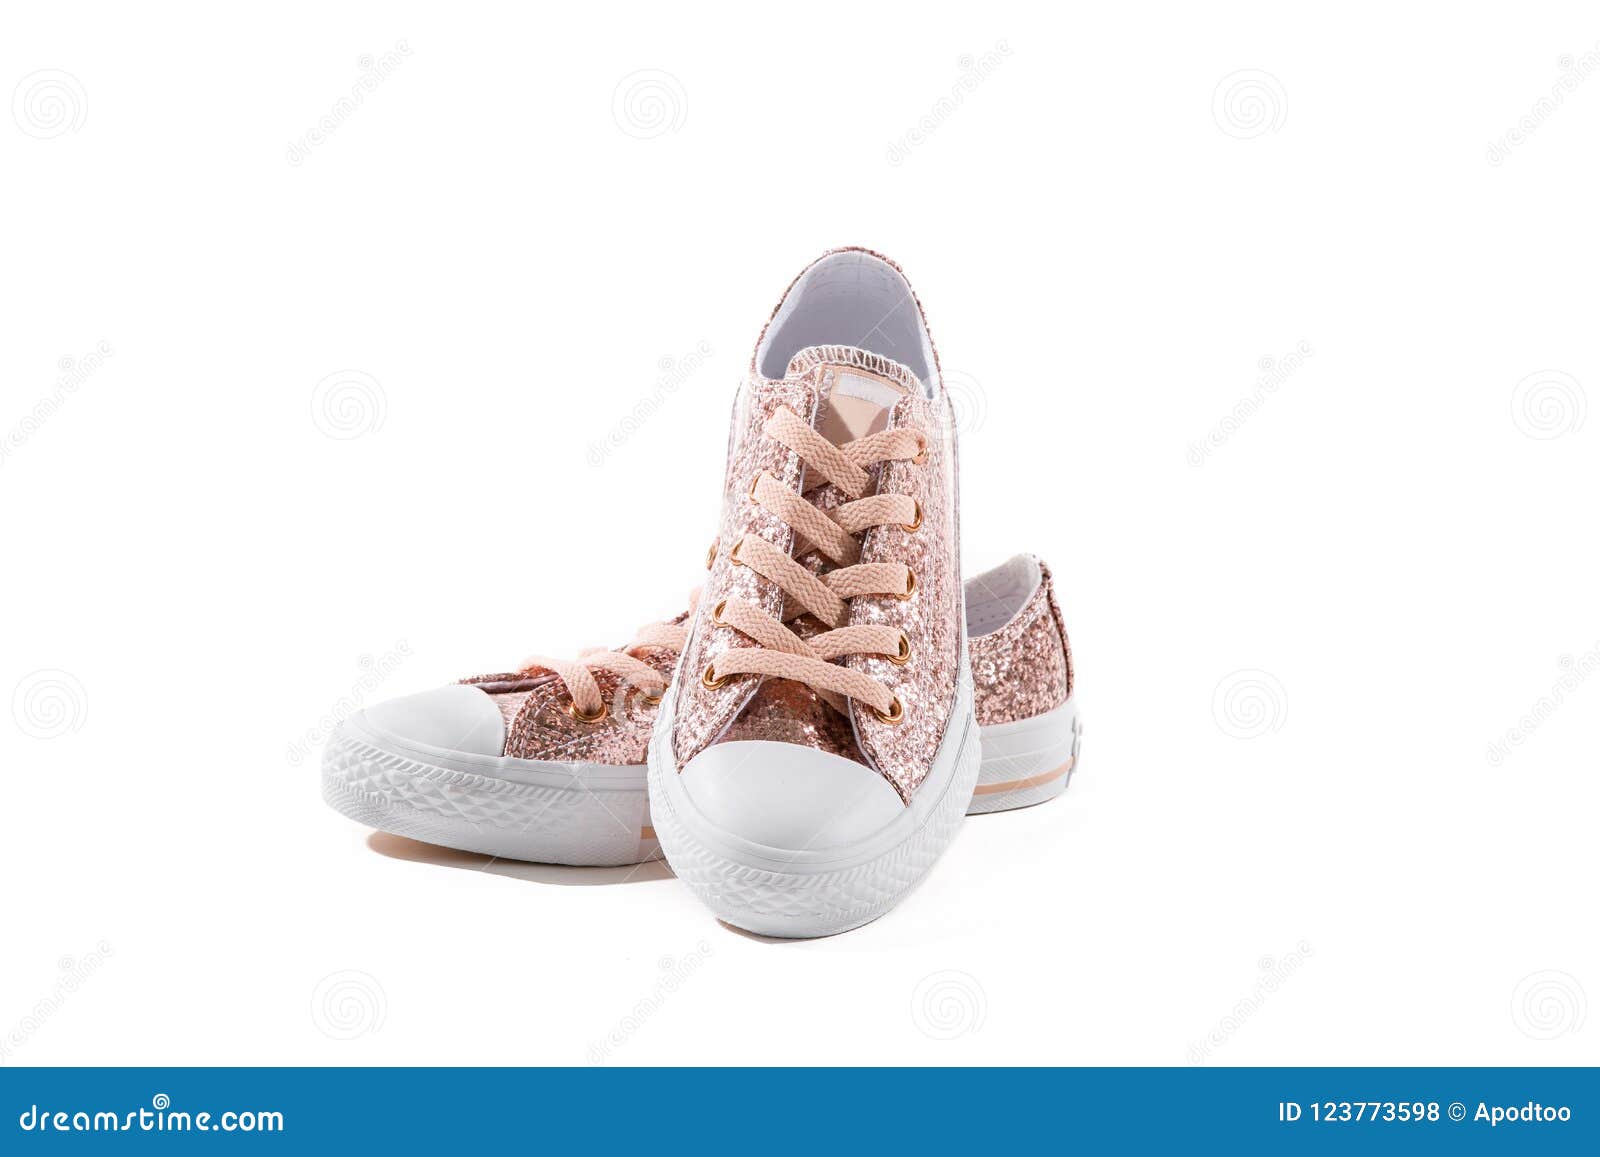 girls pink tennis shoes